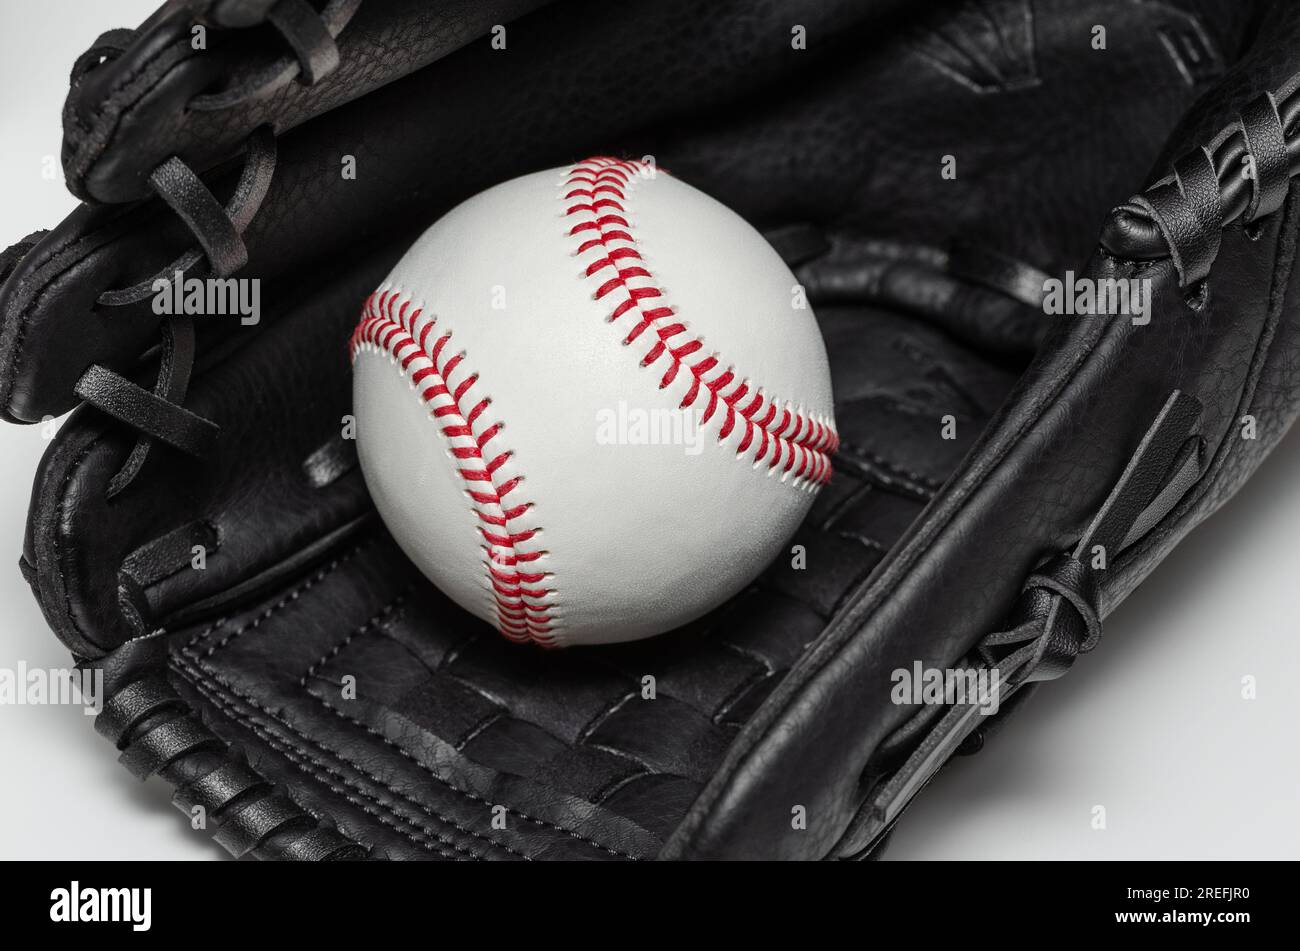 Closeup of a white baseball ball with red stitches inside baseball glove Stock Photo